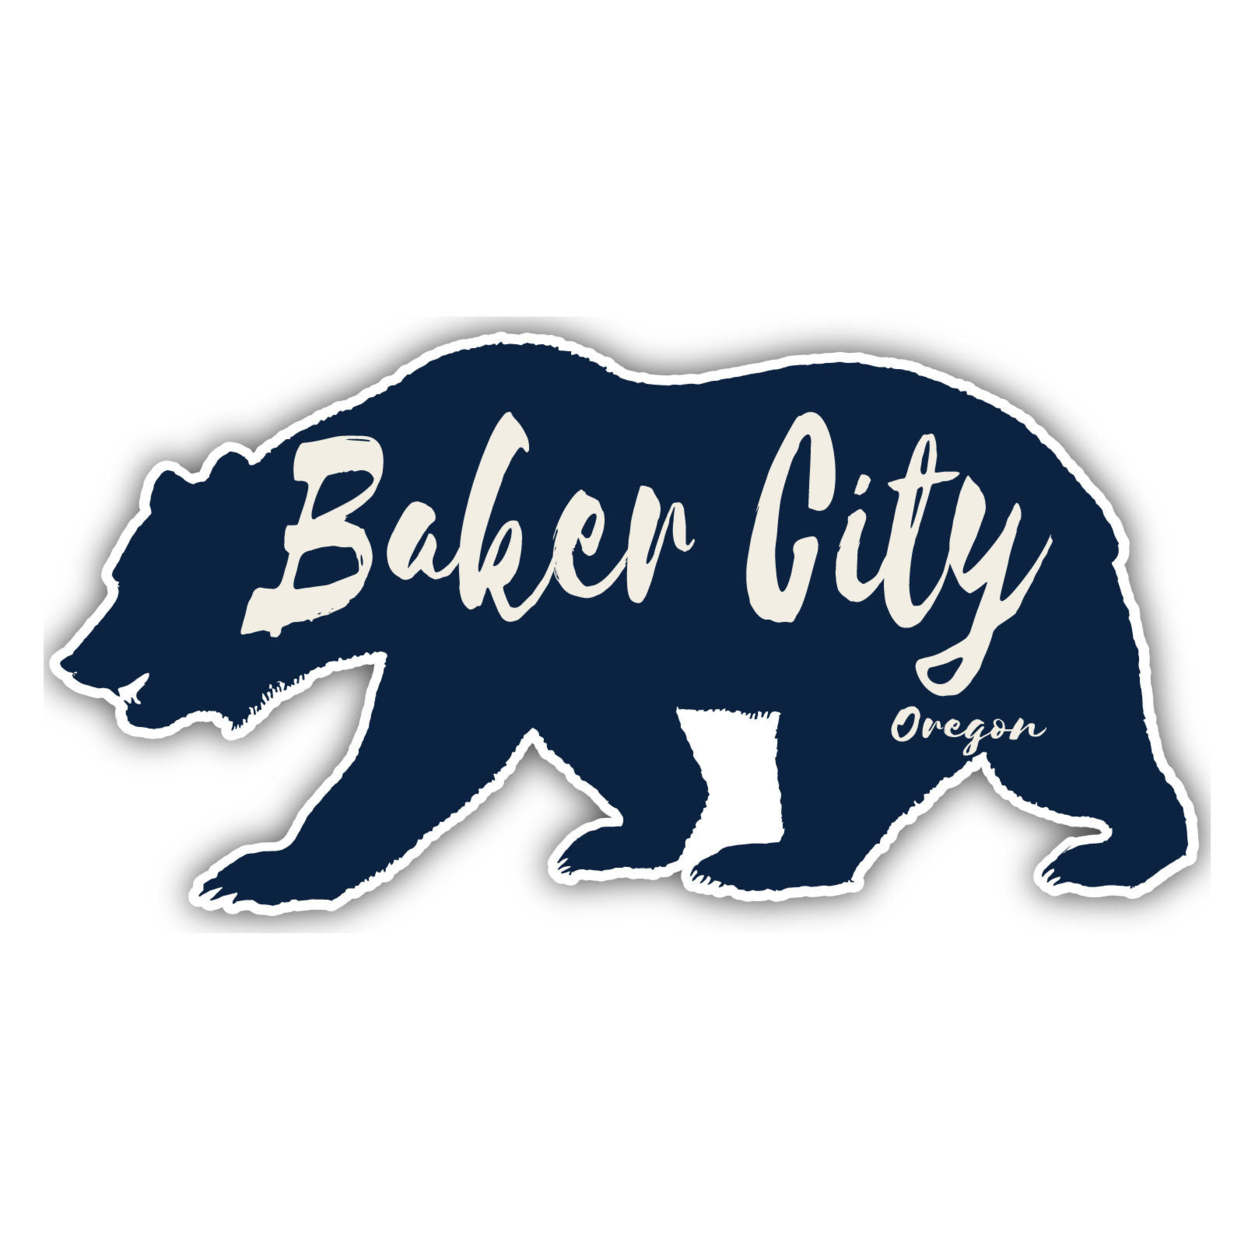 Baker City Oregon Souvenir Decorative Stickers (Choose Theme And Size) - Single Unit, 8-Inch, Adventures Awaits